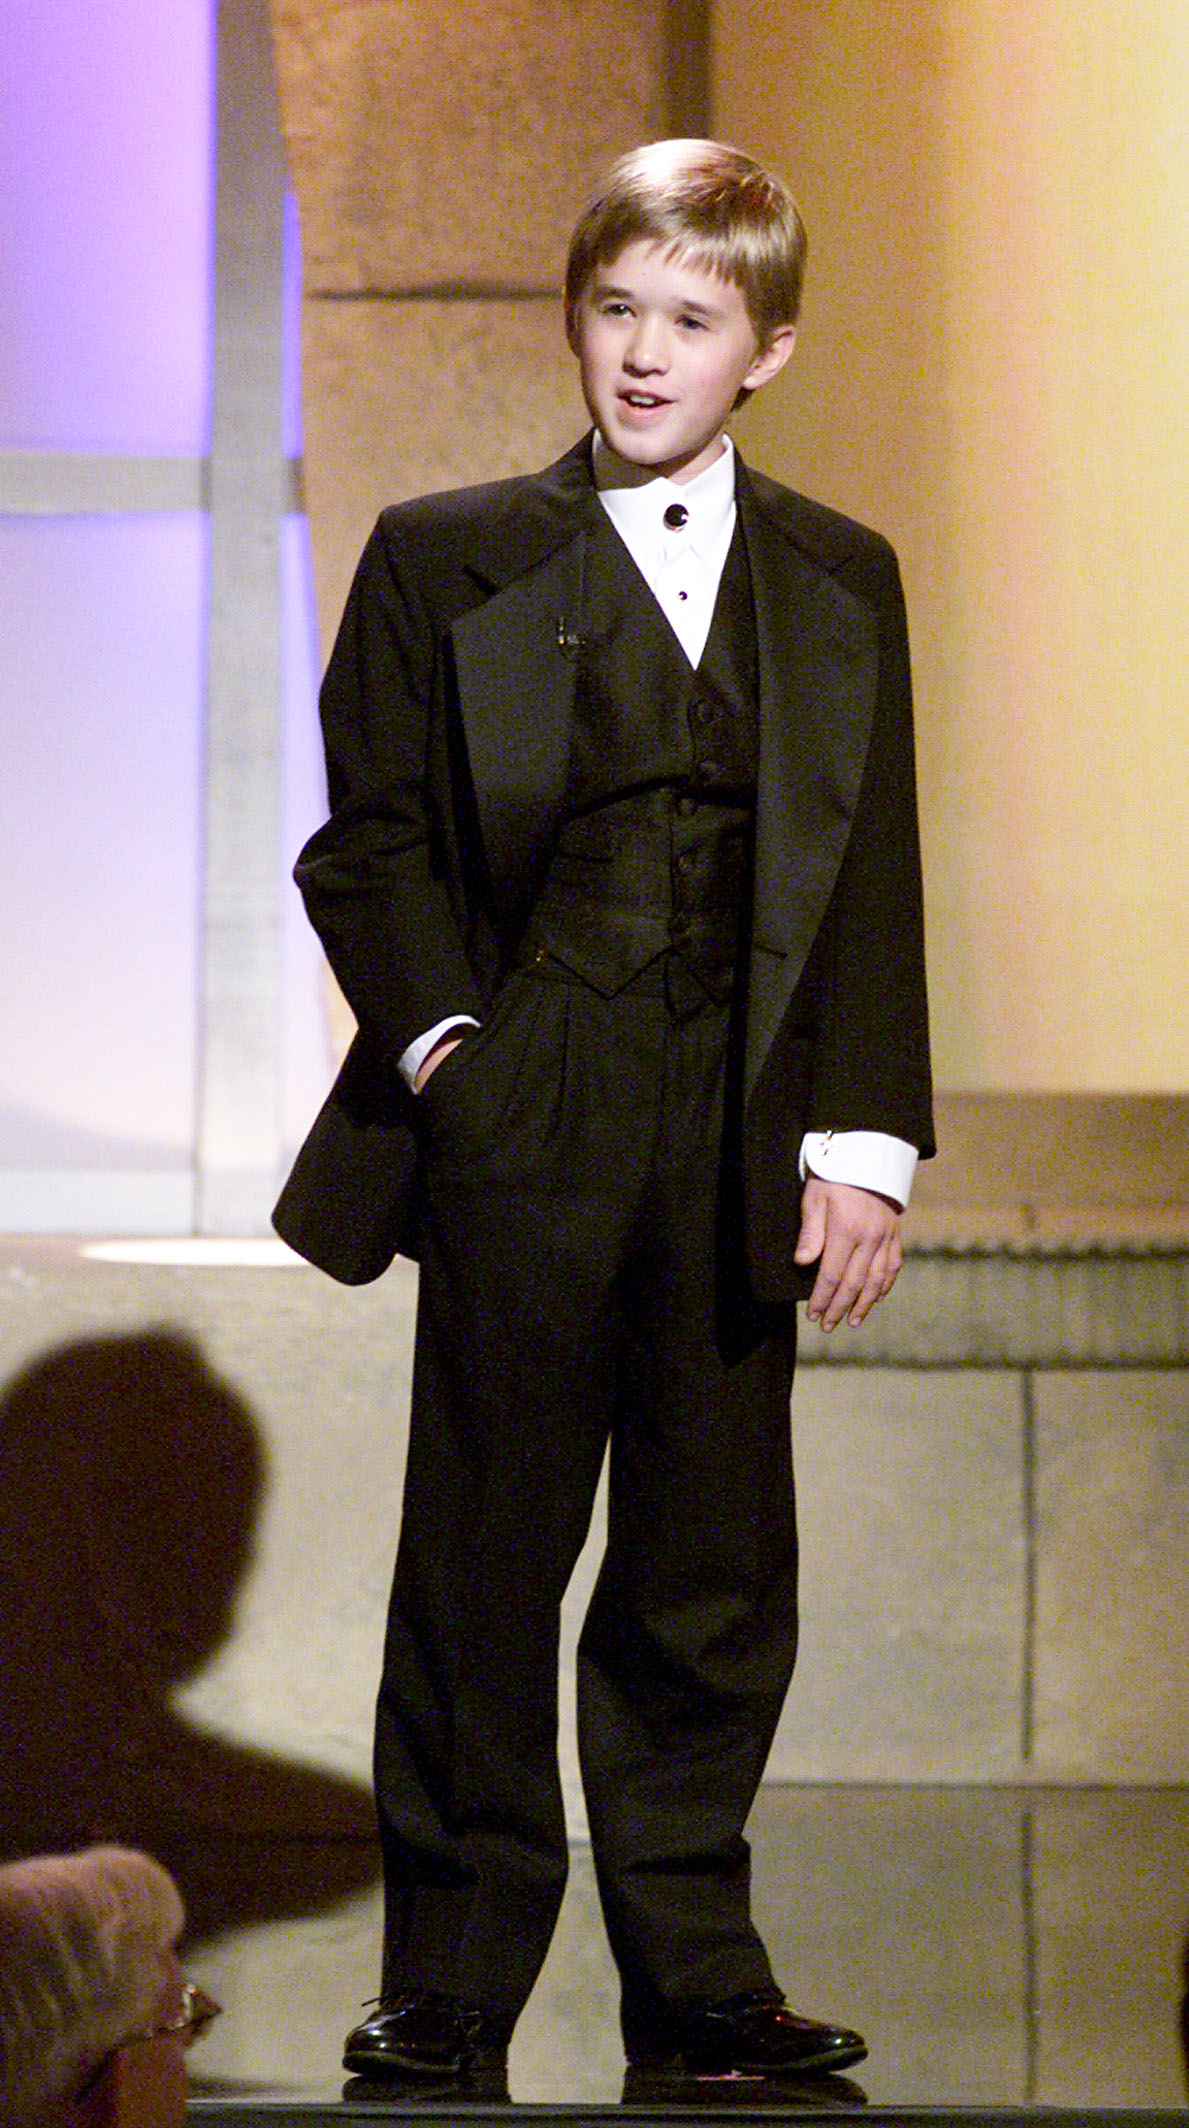 Haley Joel Osment à "Hollywood Salutes Bruce Willis : An American Cinematheque Tribute" à l'hôtel Beverly Hilton le 23 septembre 2000 à Beverly Hills, Californie. | Source : Getty Images